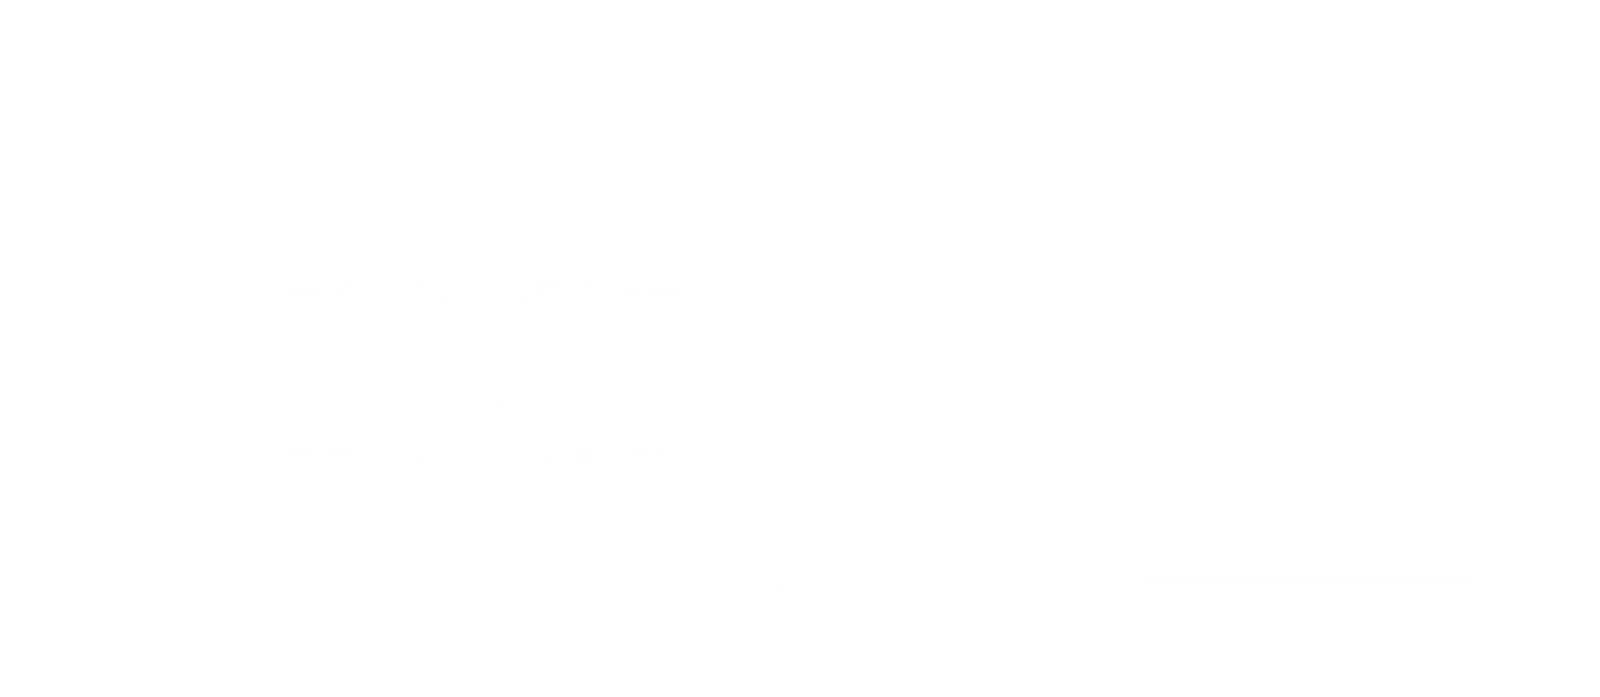 Boombox-logo-File-03-1